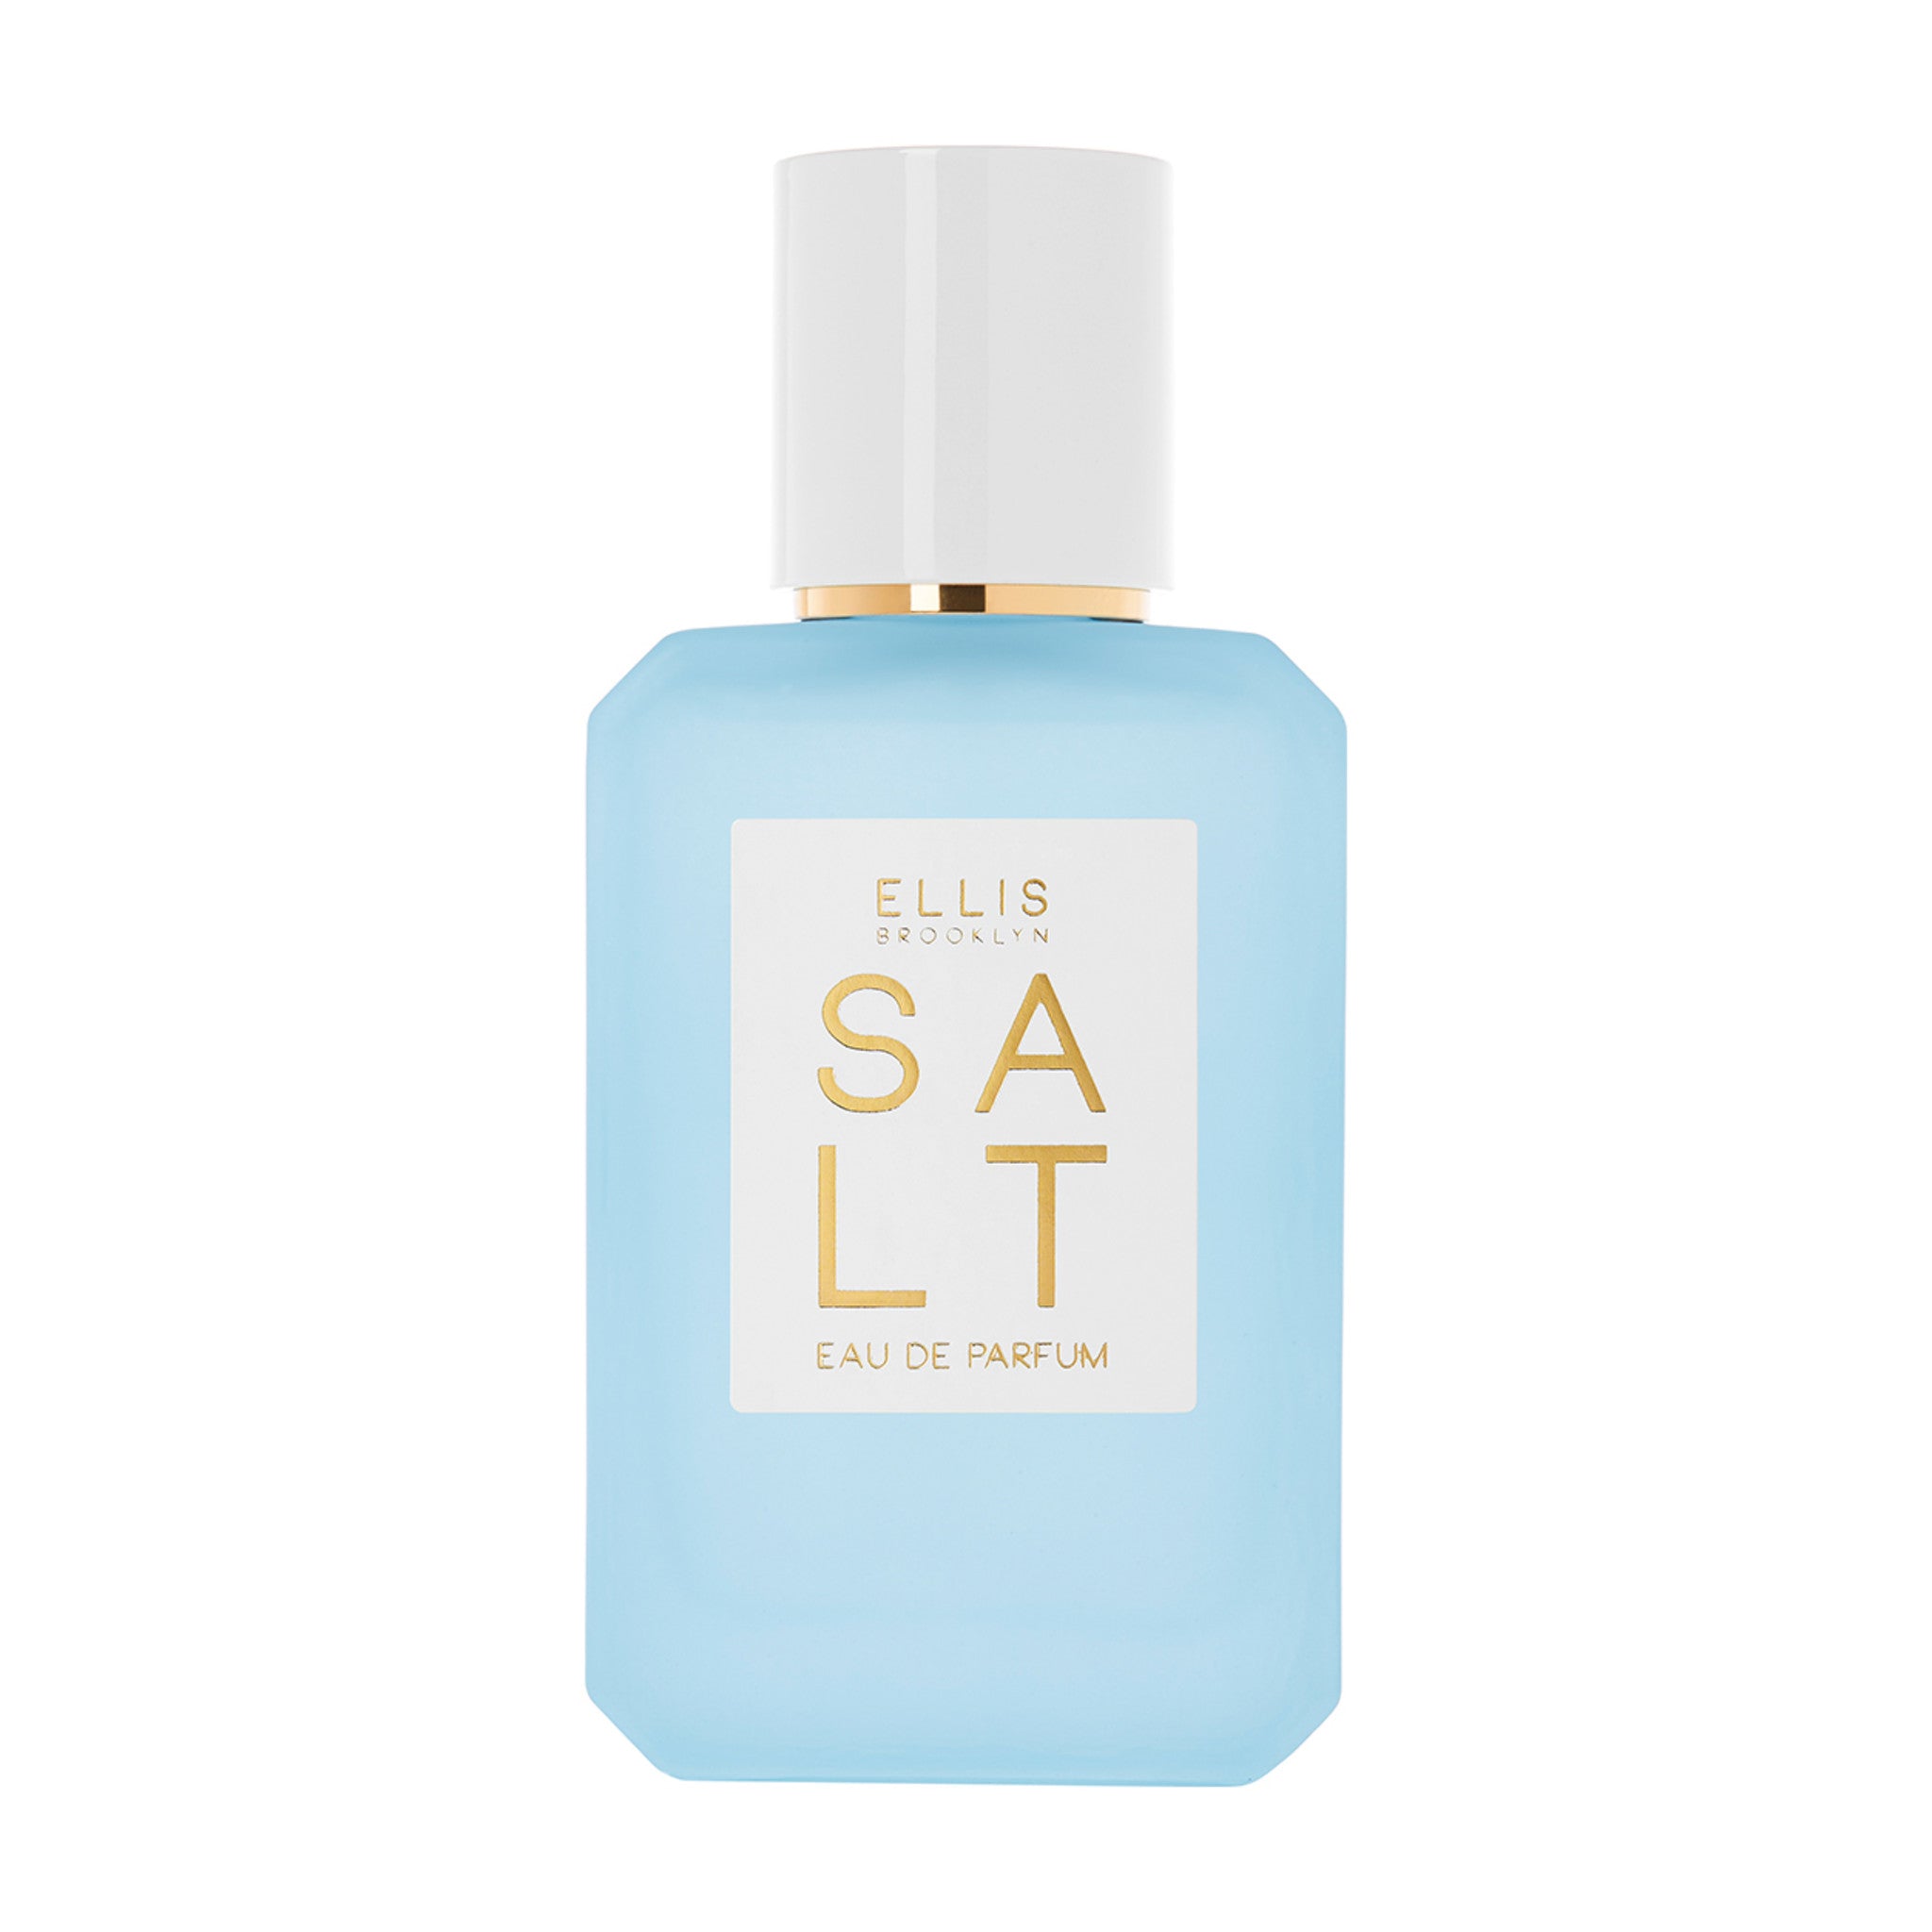 Ellis Brooklyn Salt Eau de Parfum Size variant: 1.7 fl oz | 50 ml main image.